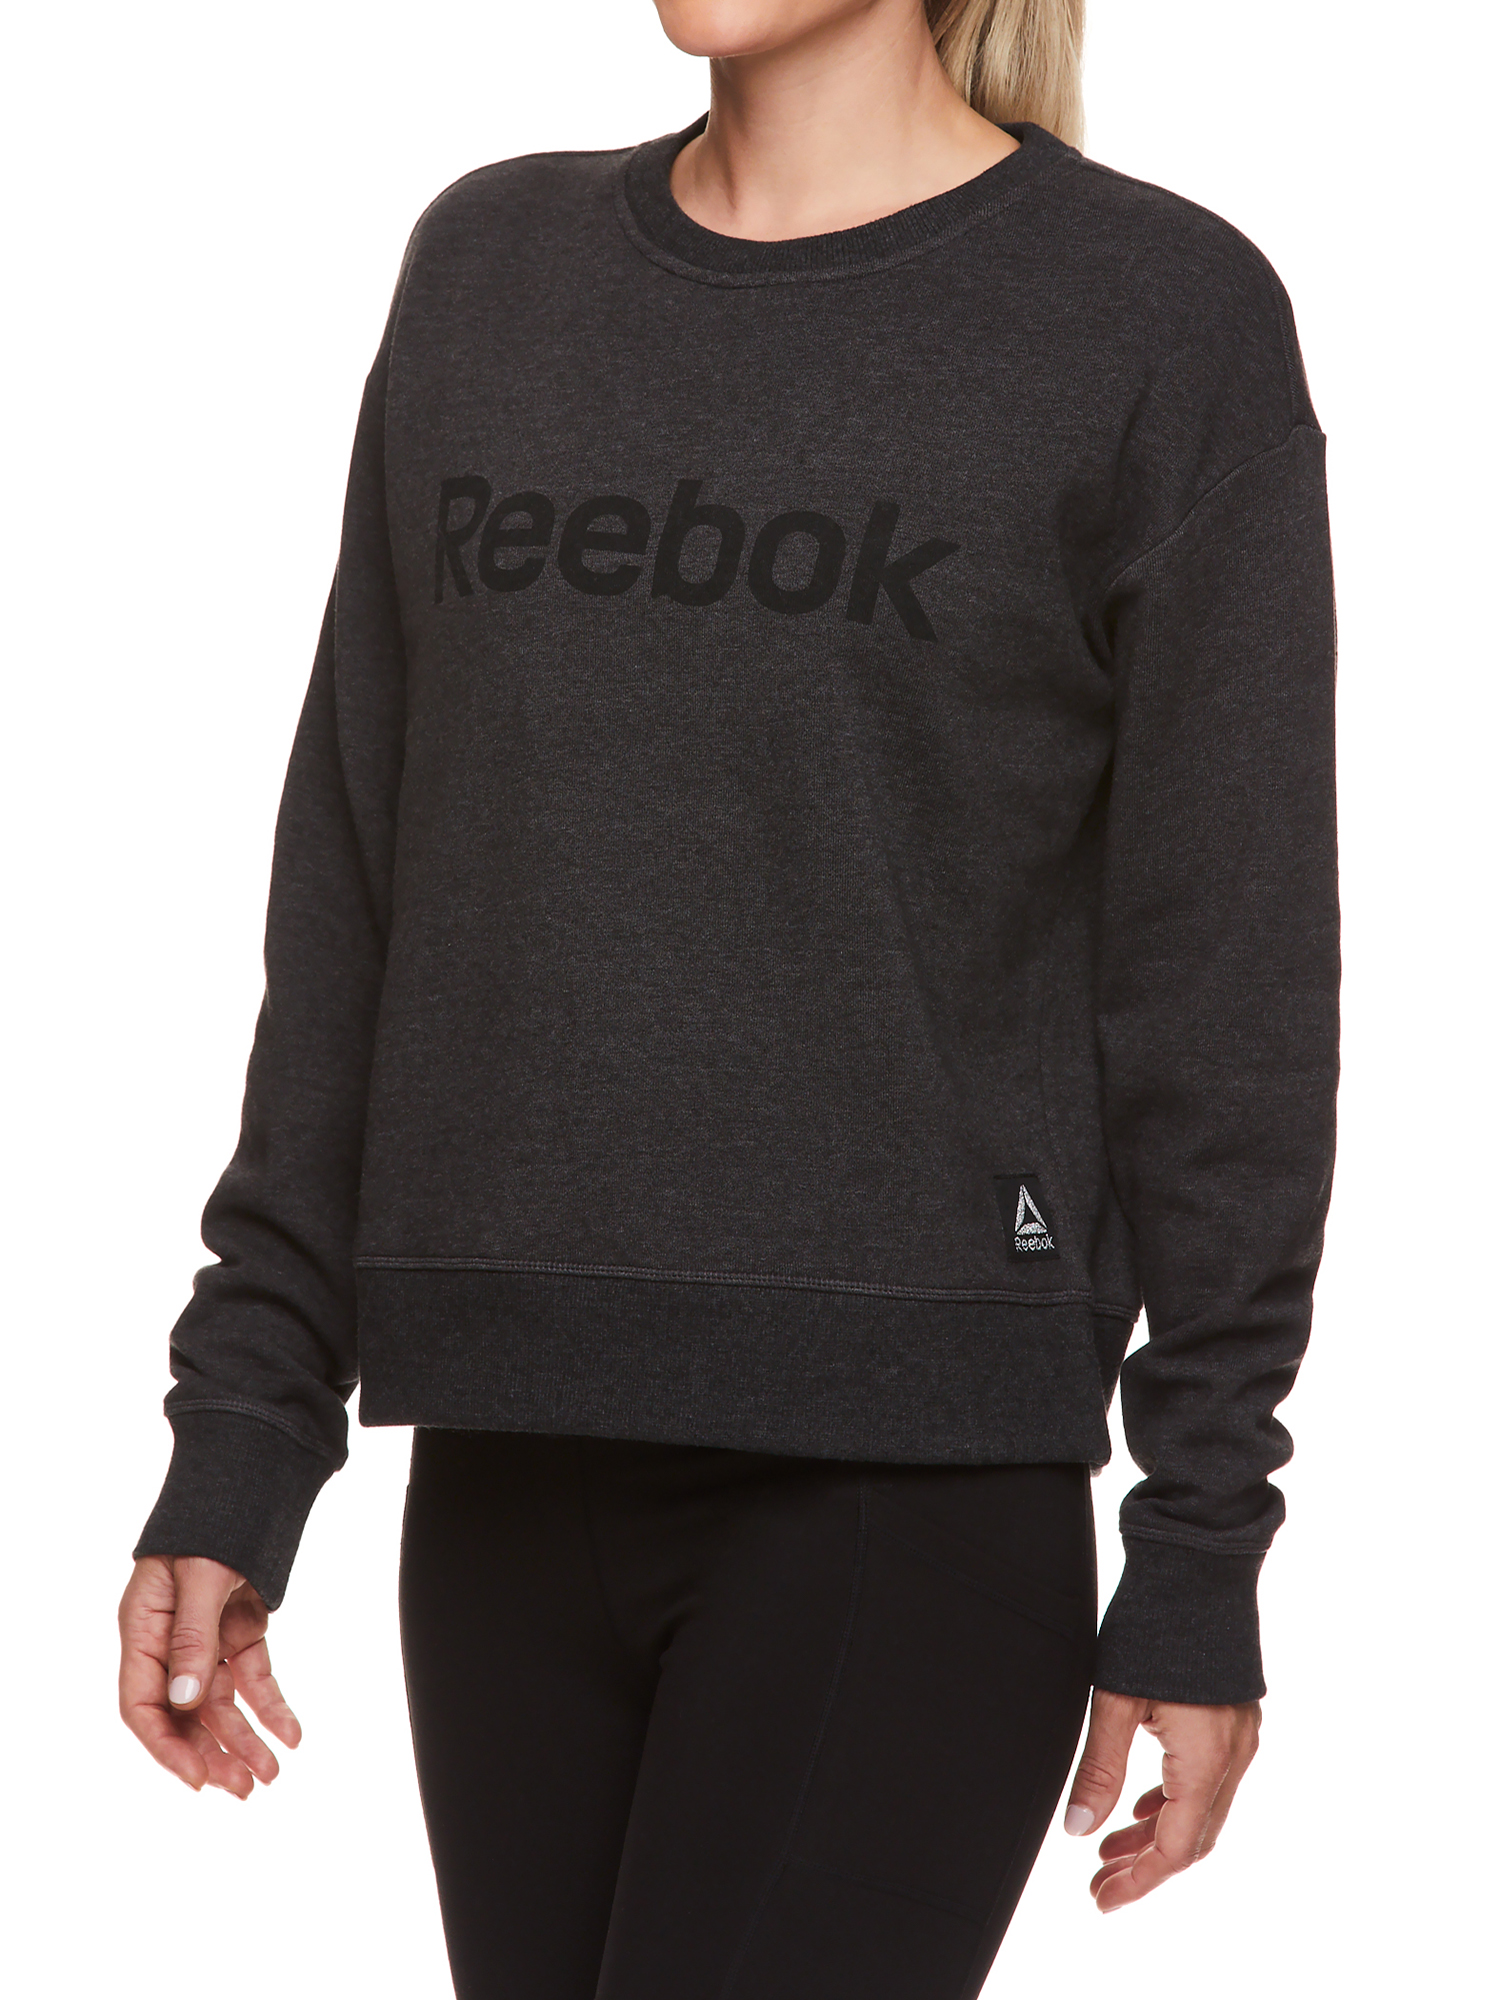 Reebok Womens Cozy Crewneck Sweatshirt with Graphic - image 2 of 4